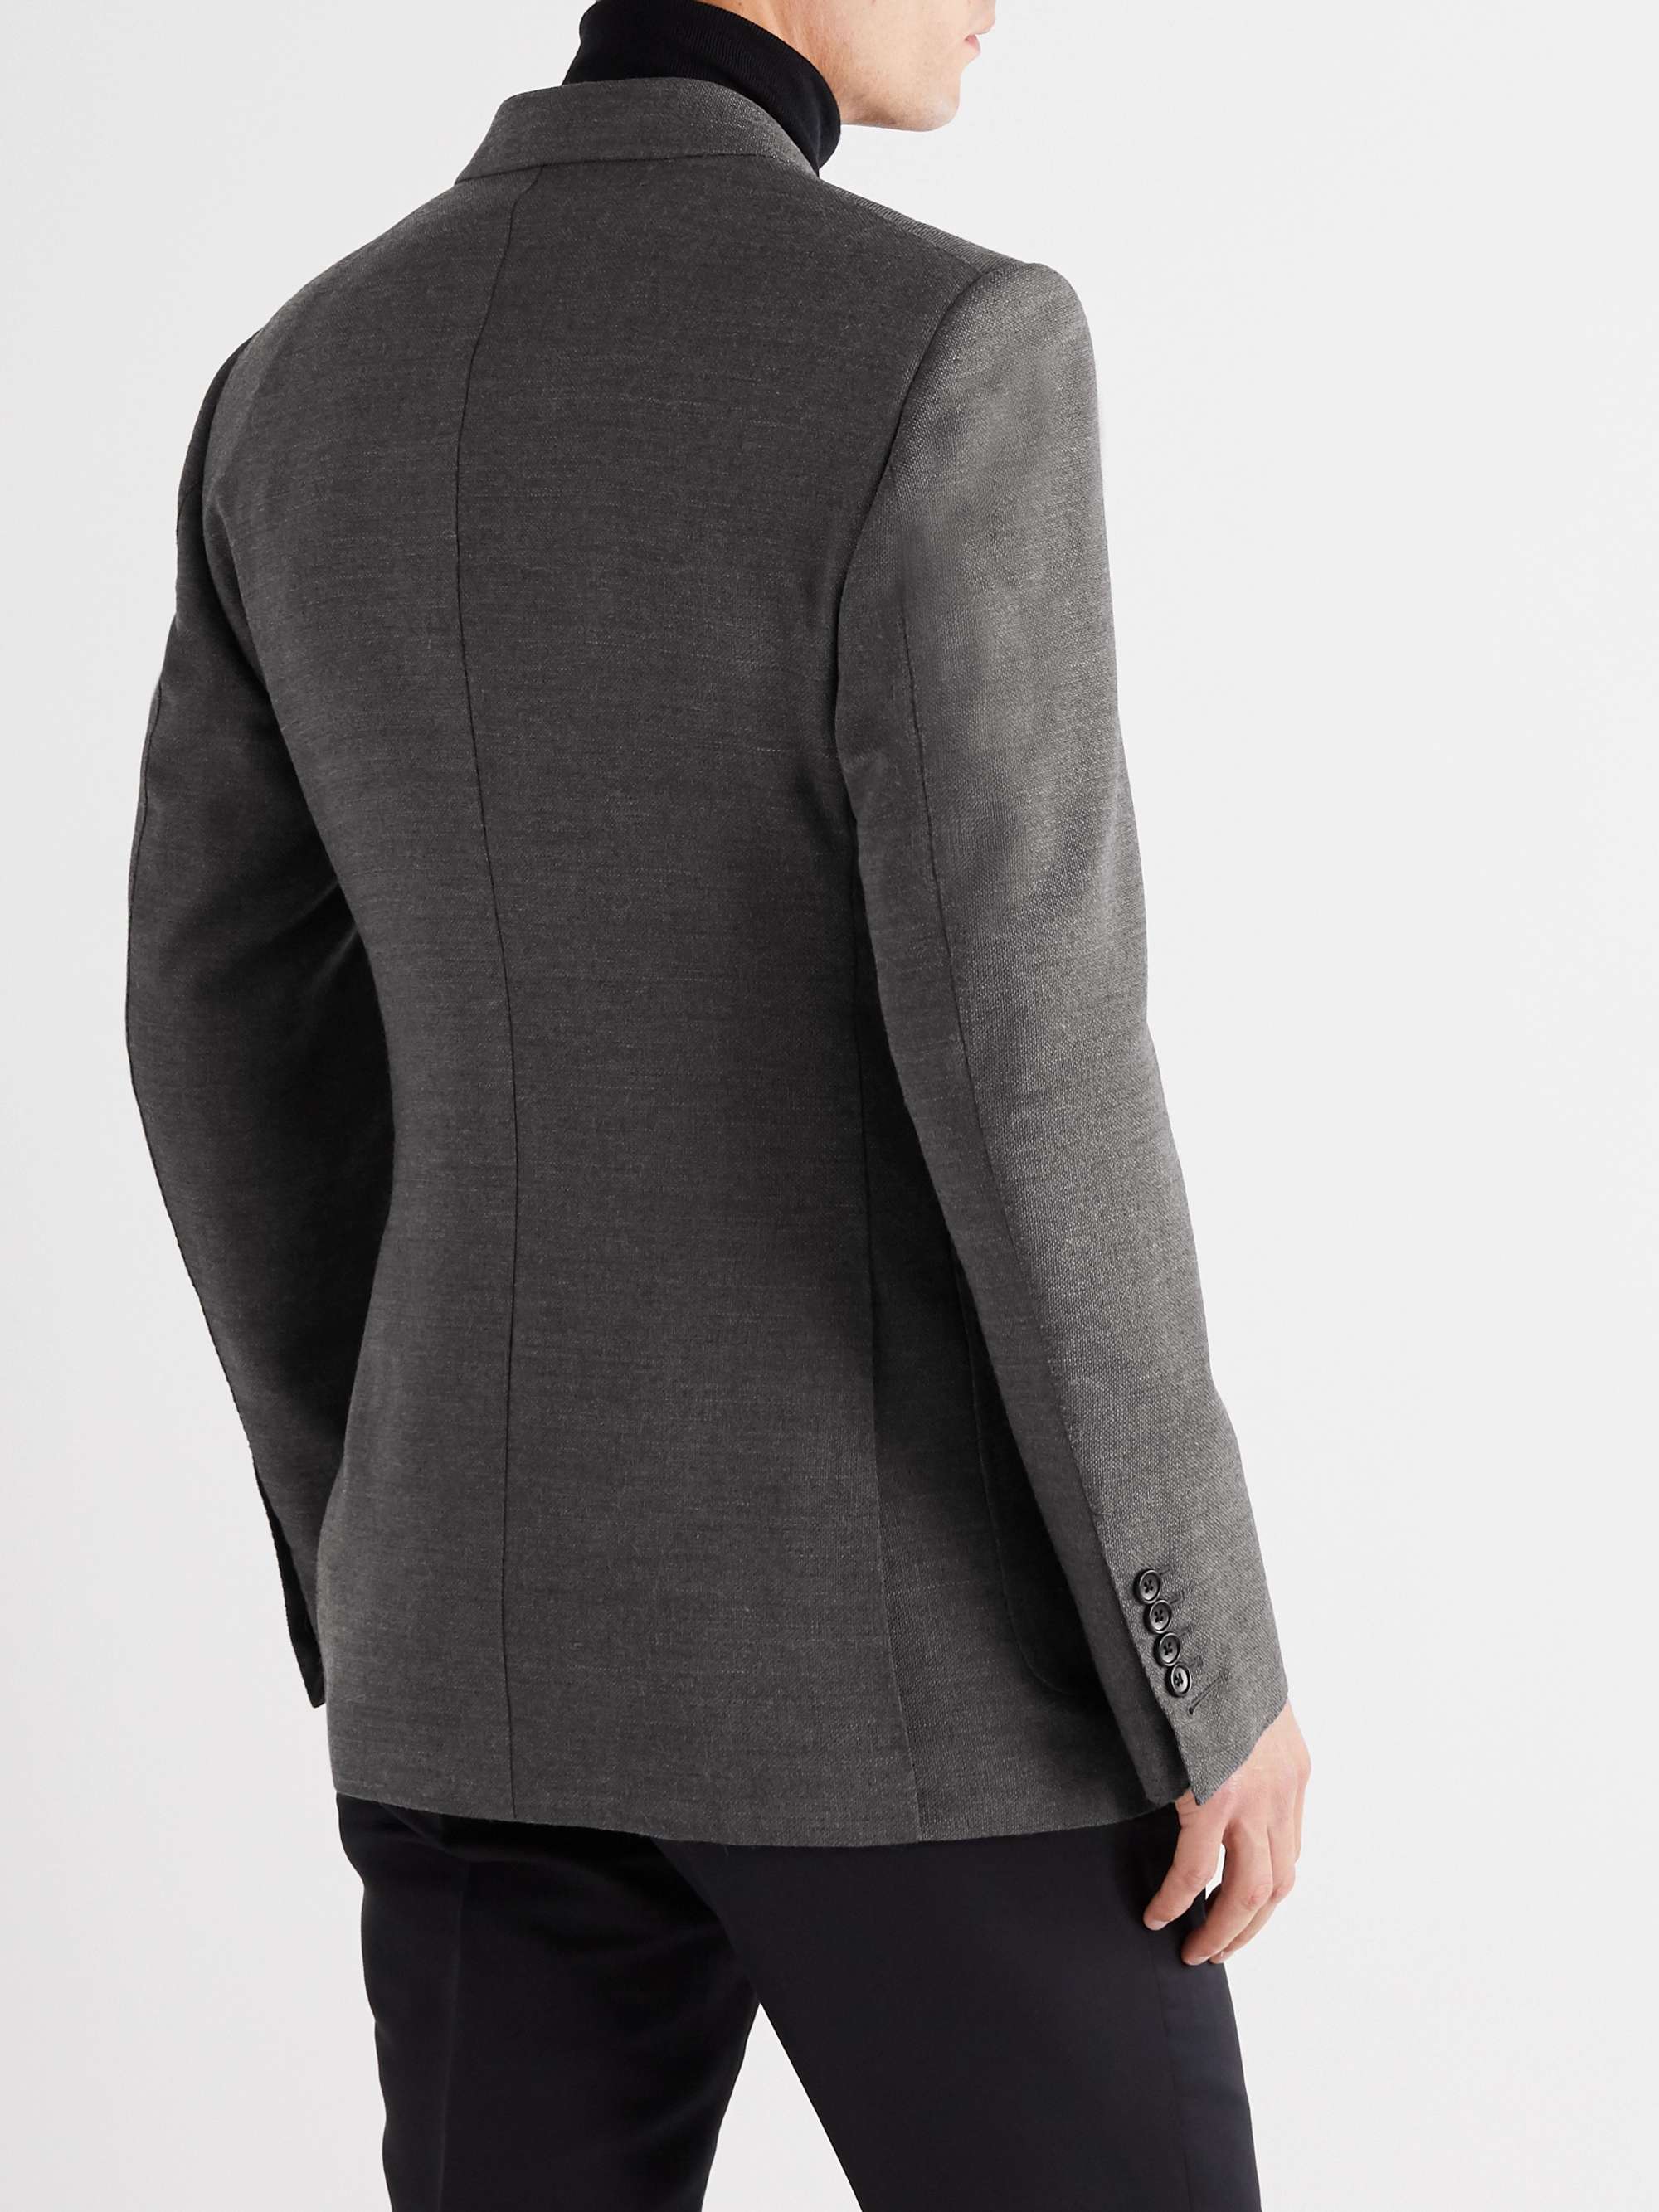 TOM FORD O'Connor Slim-Fit Wool-Blend Suit Jacket